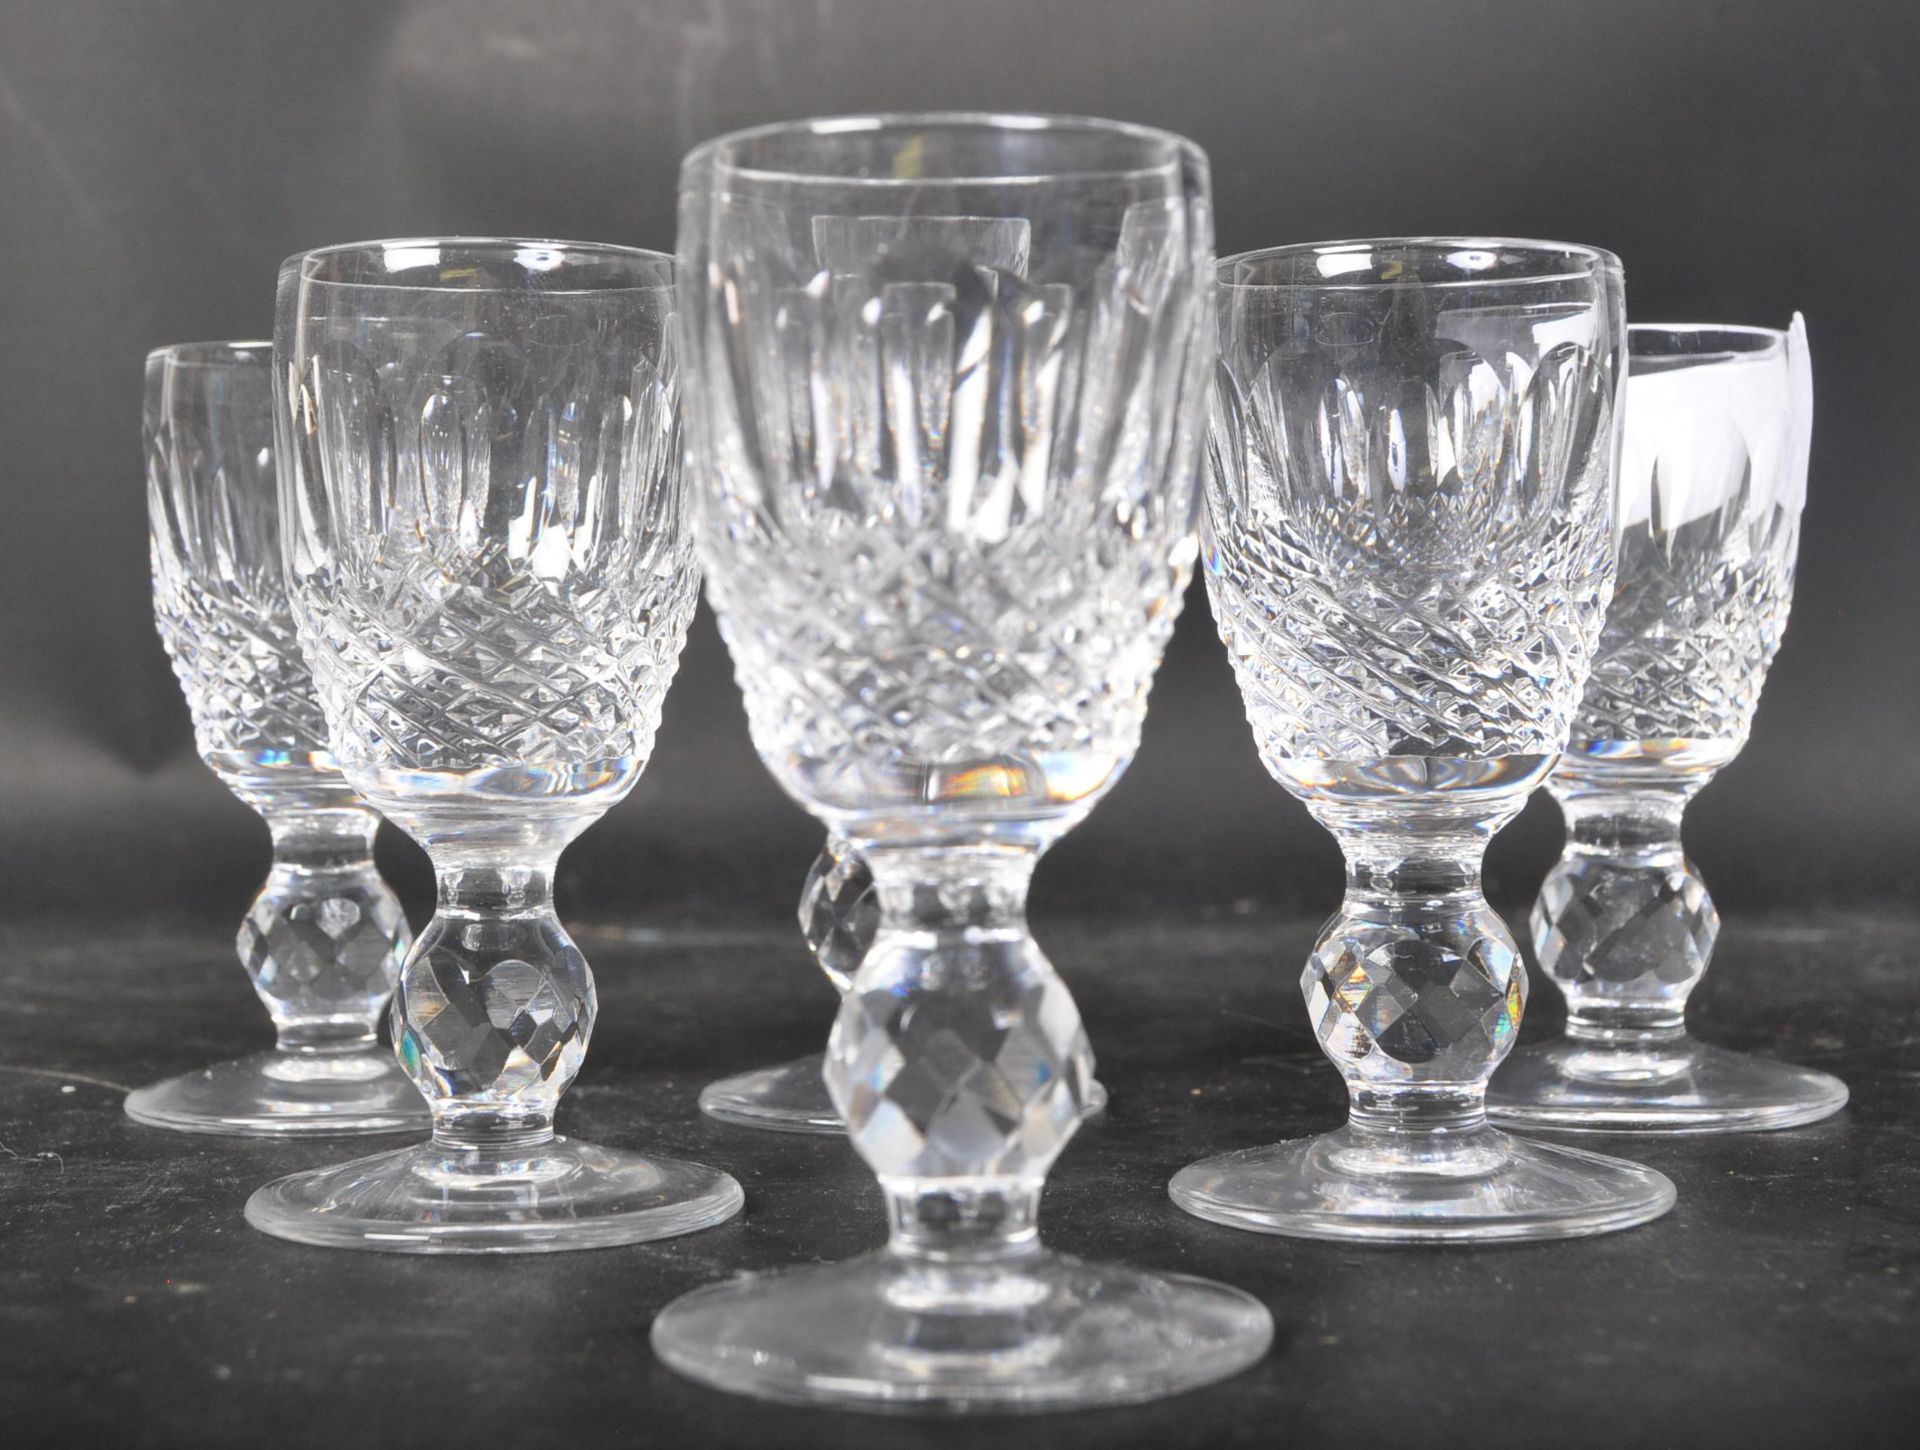 SIX VINTAGE WATERFORD CRYSTAL 'LISMORE' APERITIF GLASSES - Image 5 of 5